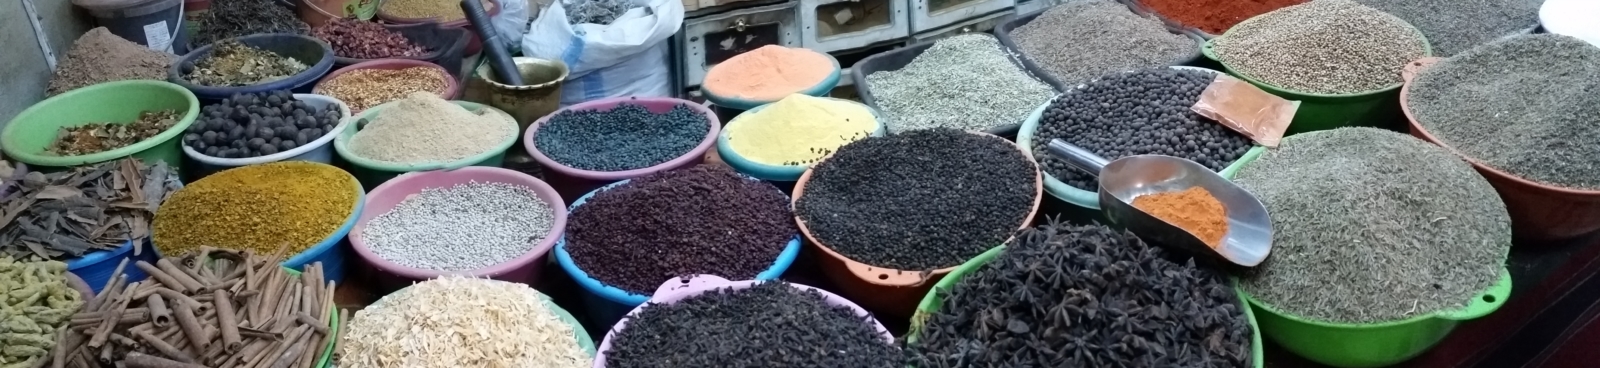 TUI_Jordanien_Aqaba_Markt_Handeln